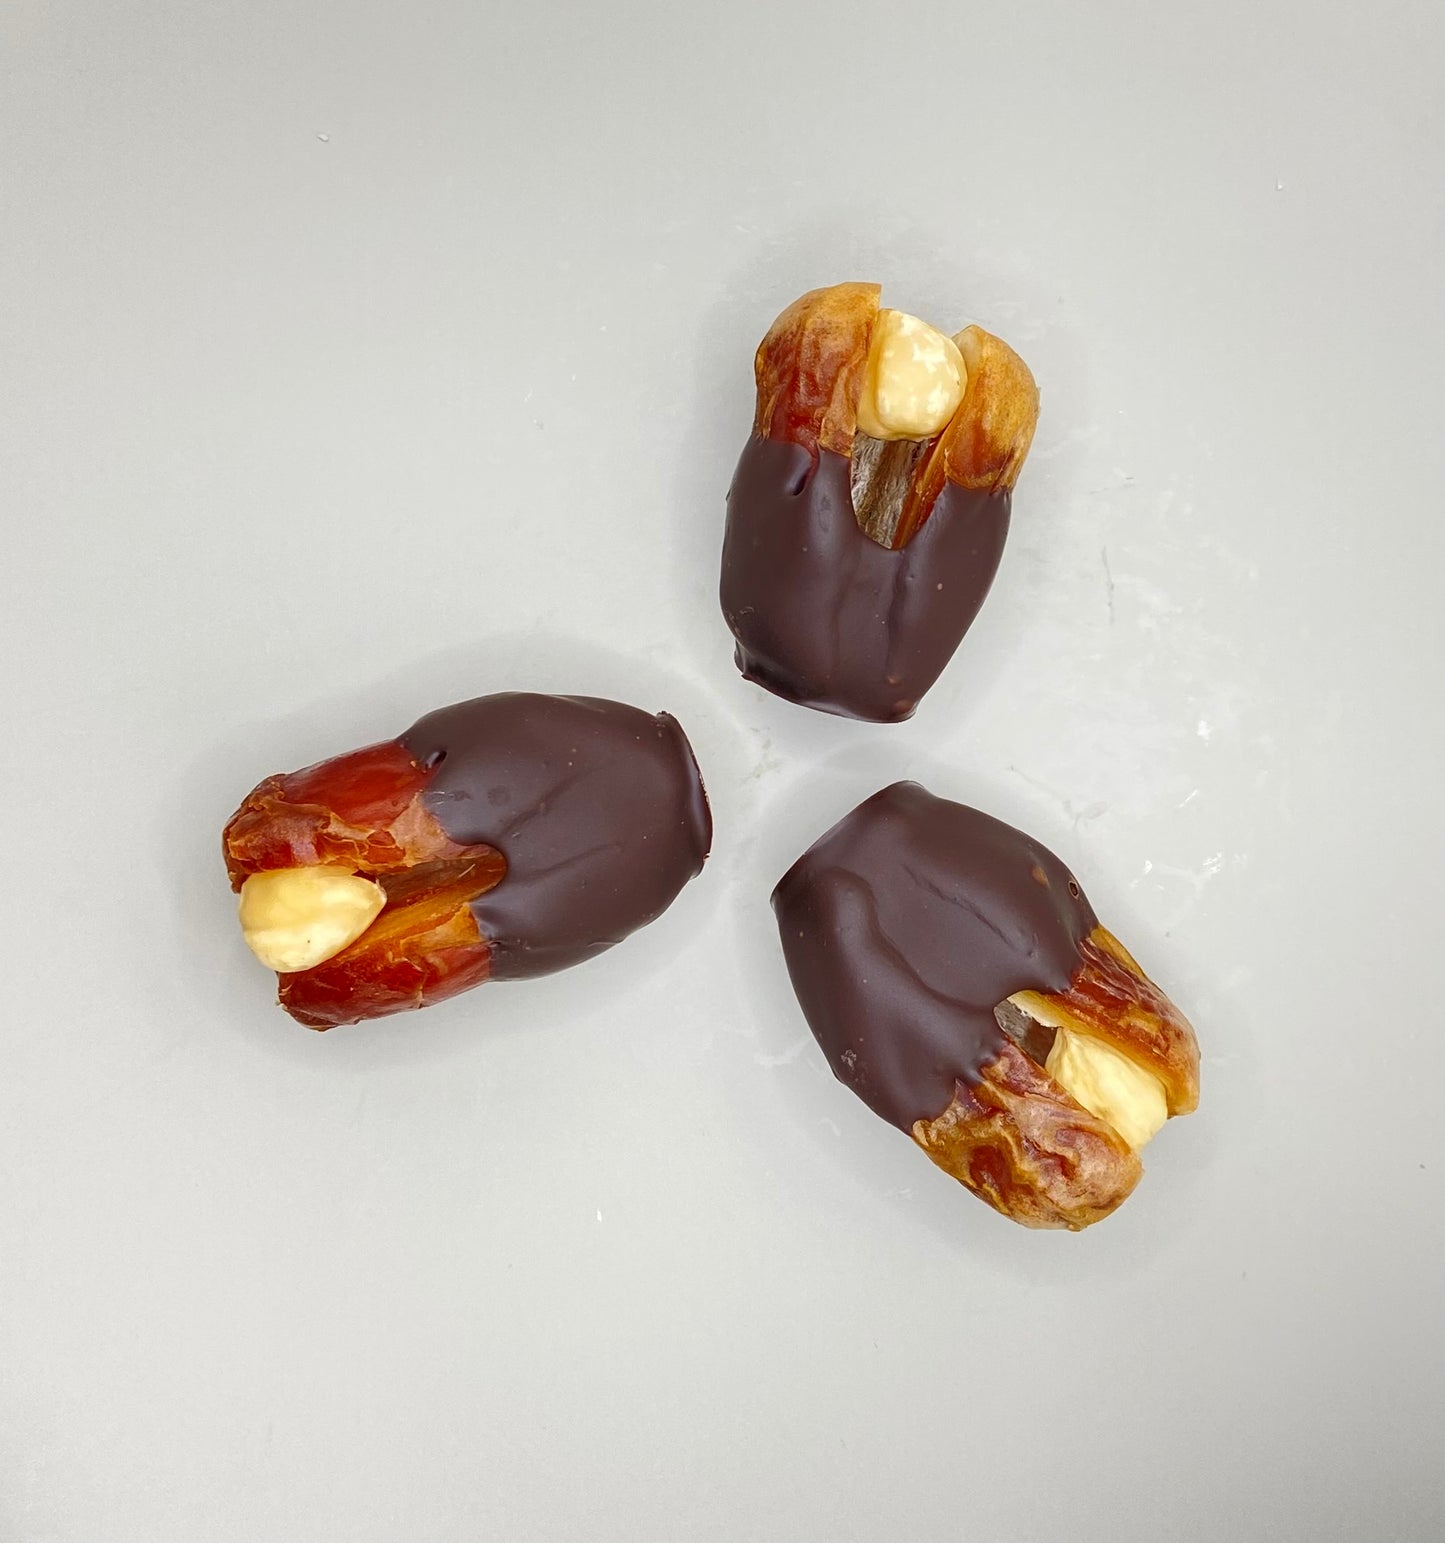 Dark Chocolate Dates Stuffed With Nuts